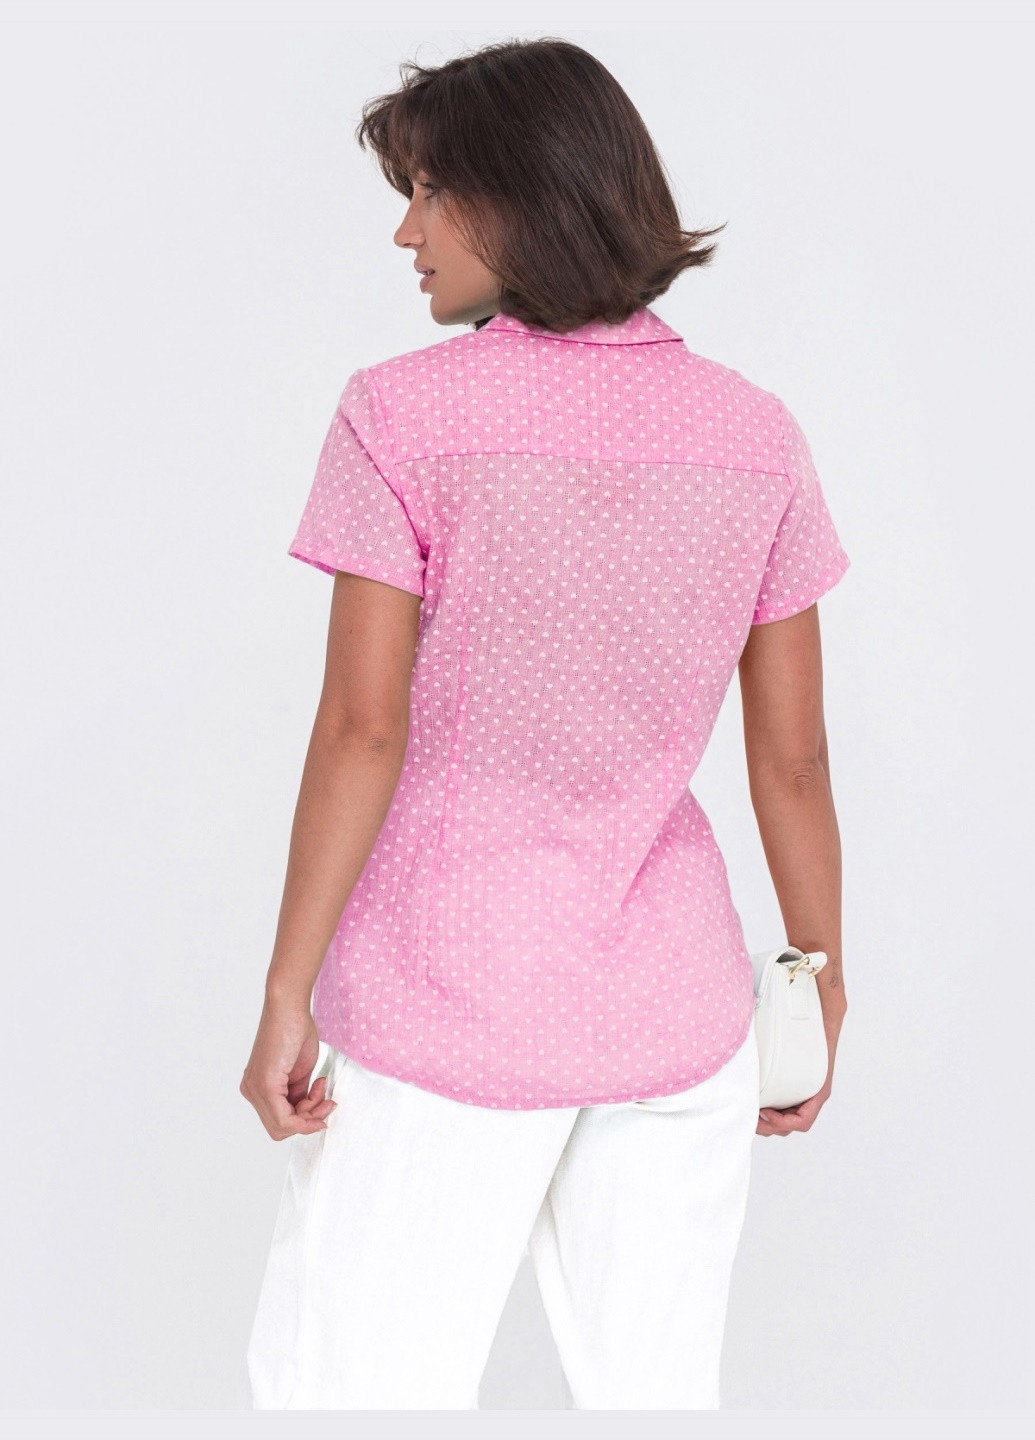 Розовая принтованная блузка на пуговицах розовая Dressa